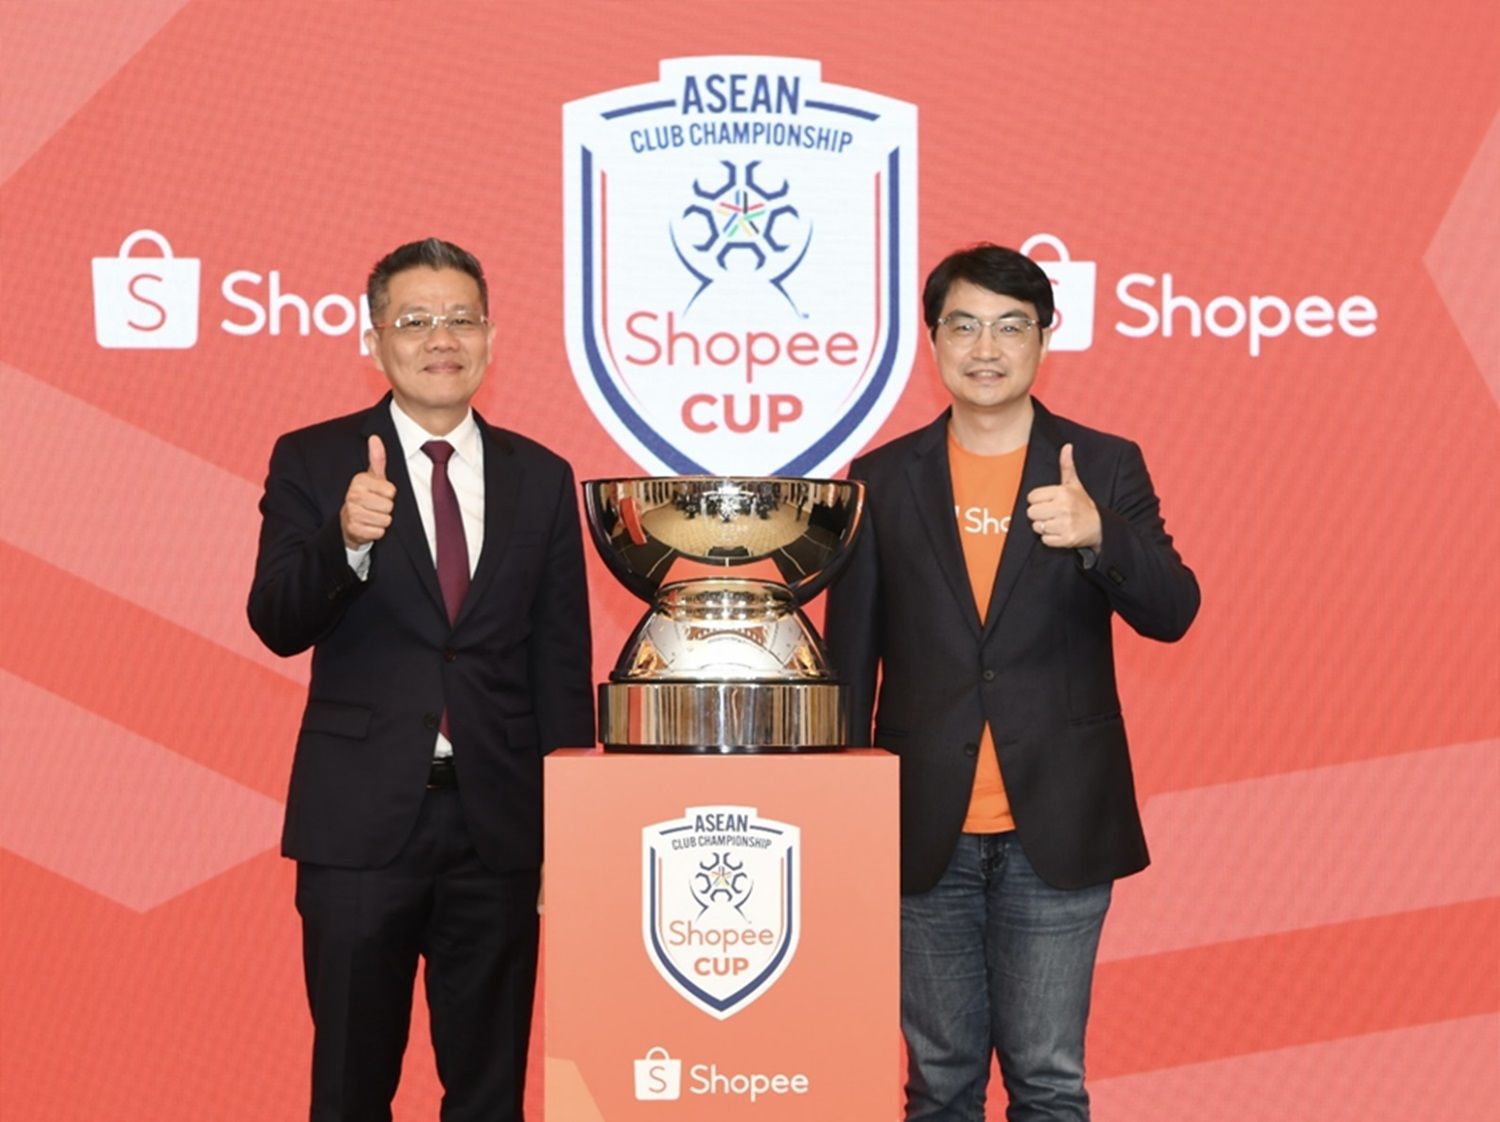 Shopee dan ASEAN Football Federation atau Federasi Sepak Bola ASEAN (AFF) berkolaborasi menyelenggarakan Shopee Cup ASEAN Club Championship.